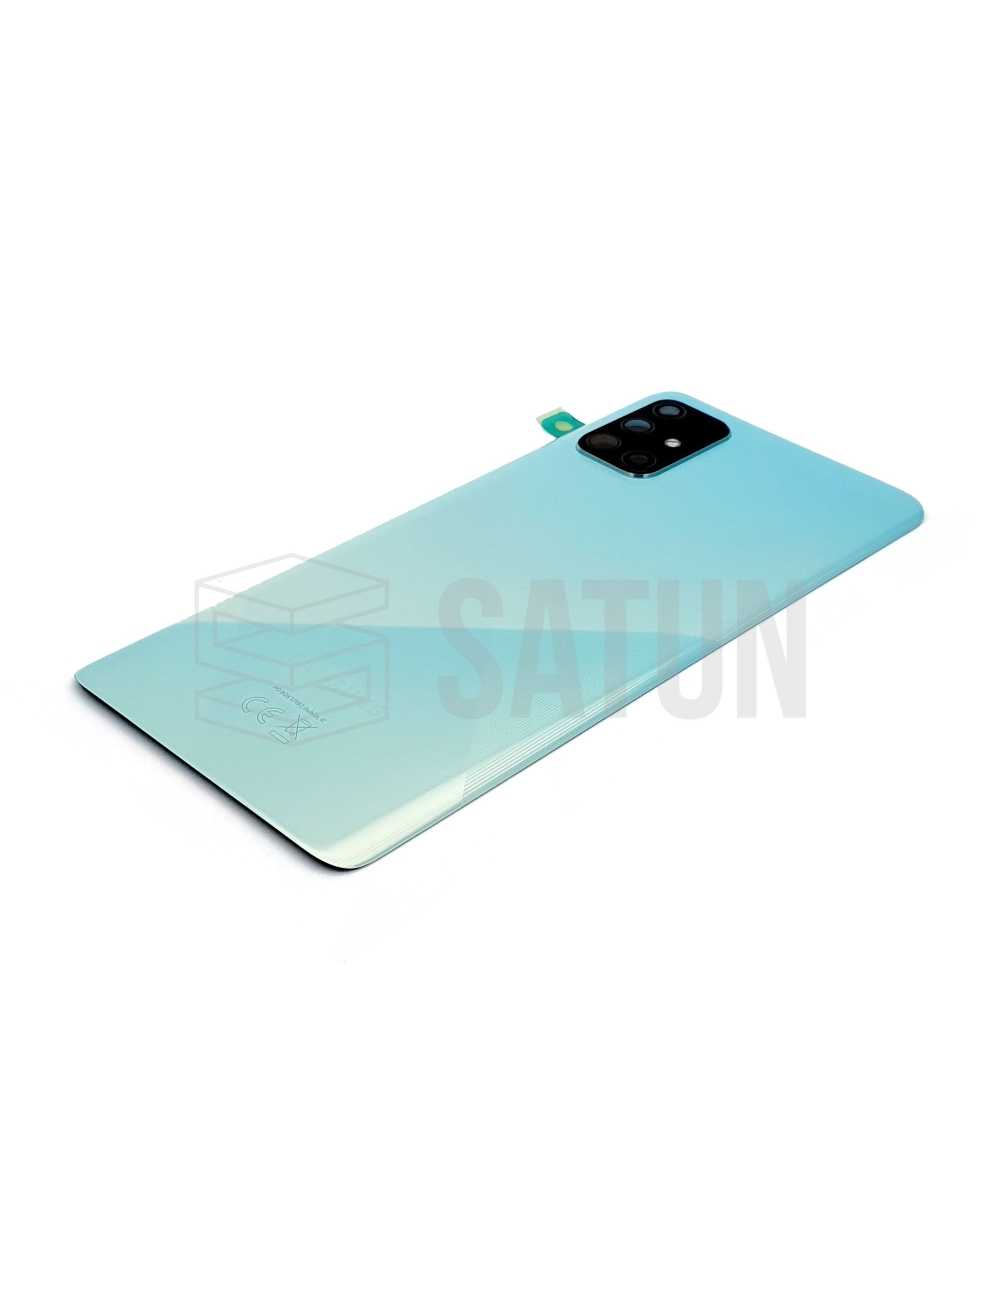 Tapa trasera original Samsung Galaxy A71 azul